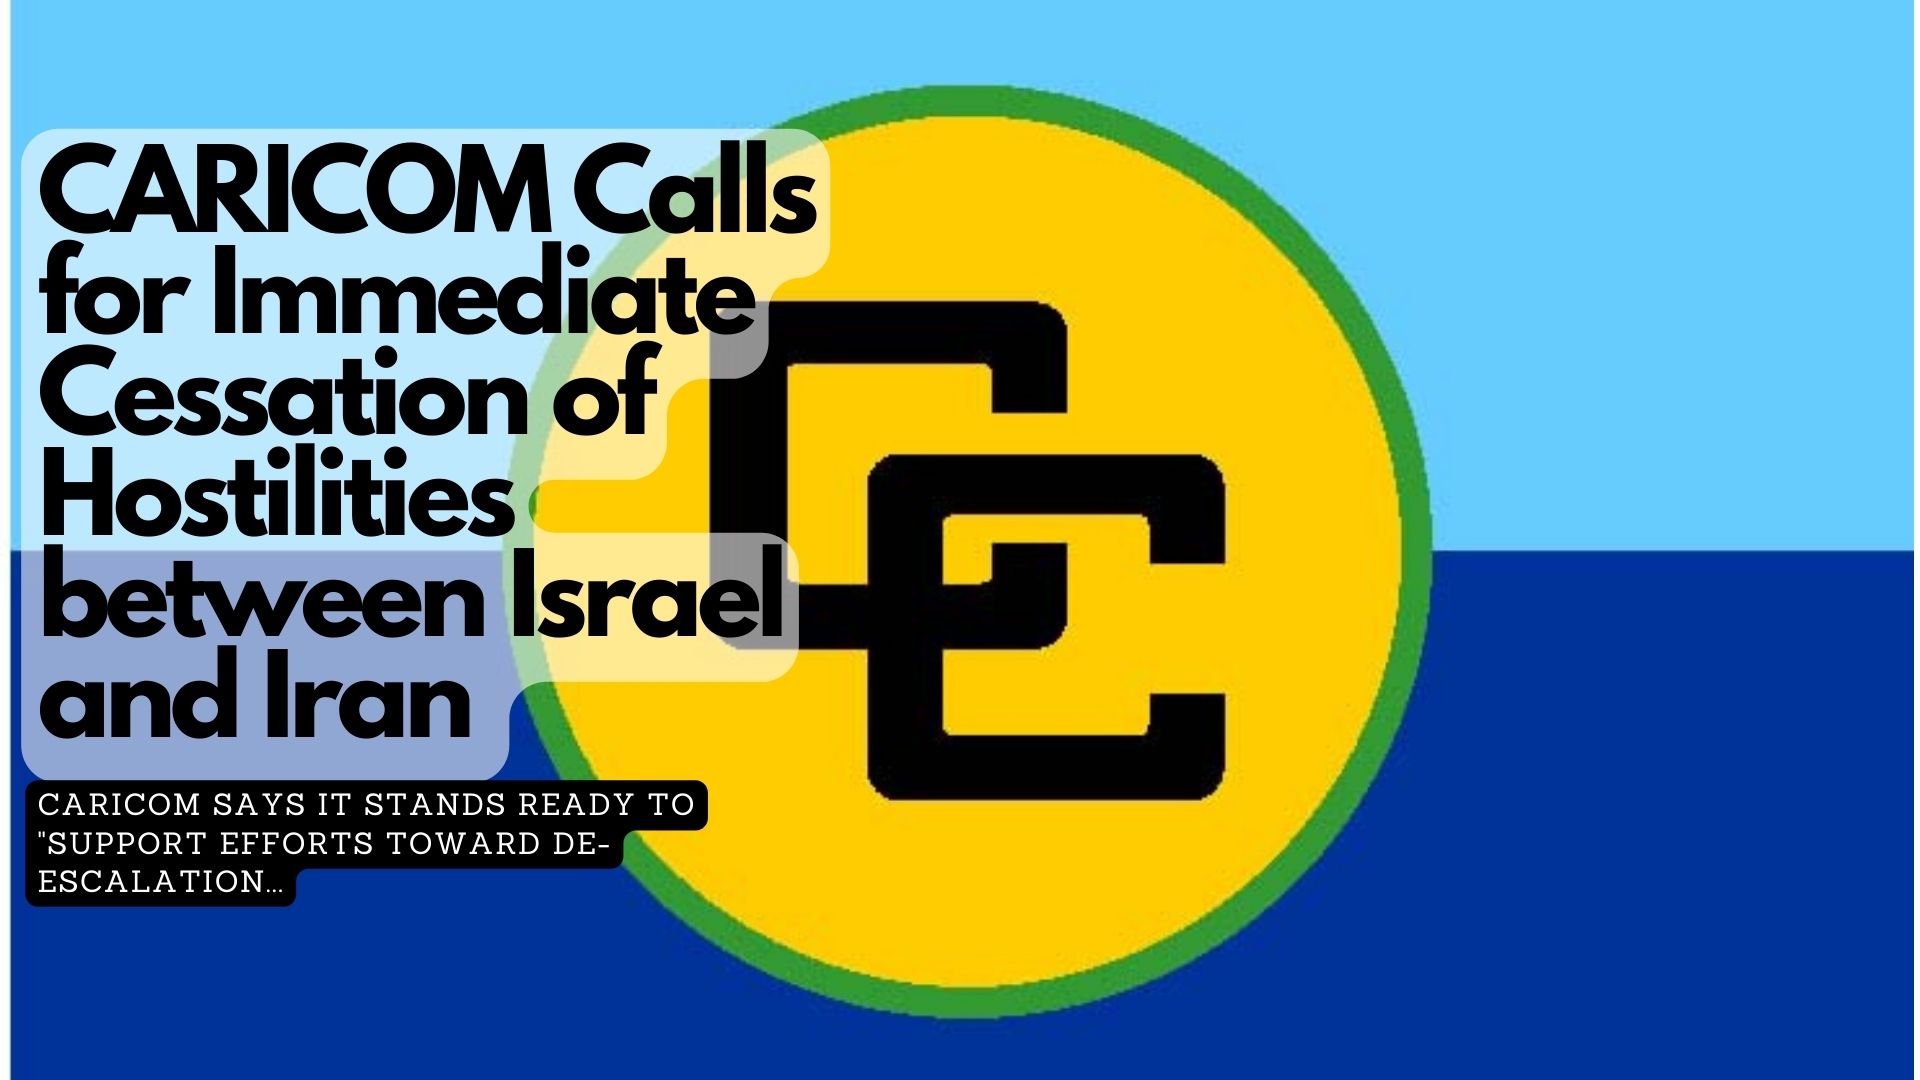 CARICOM Calls for Immediate Cessation of Hostilities between Israel and Iran